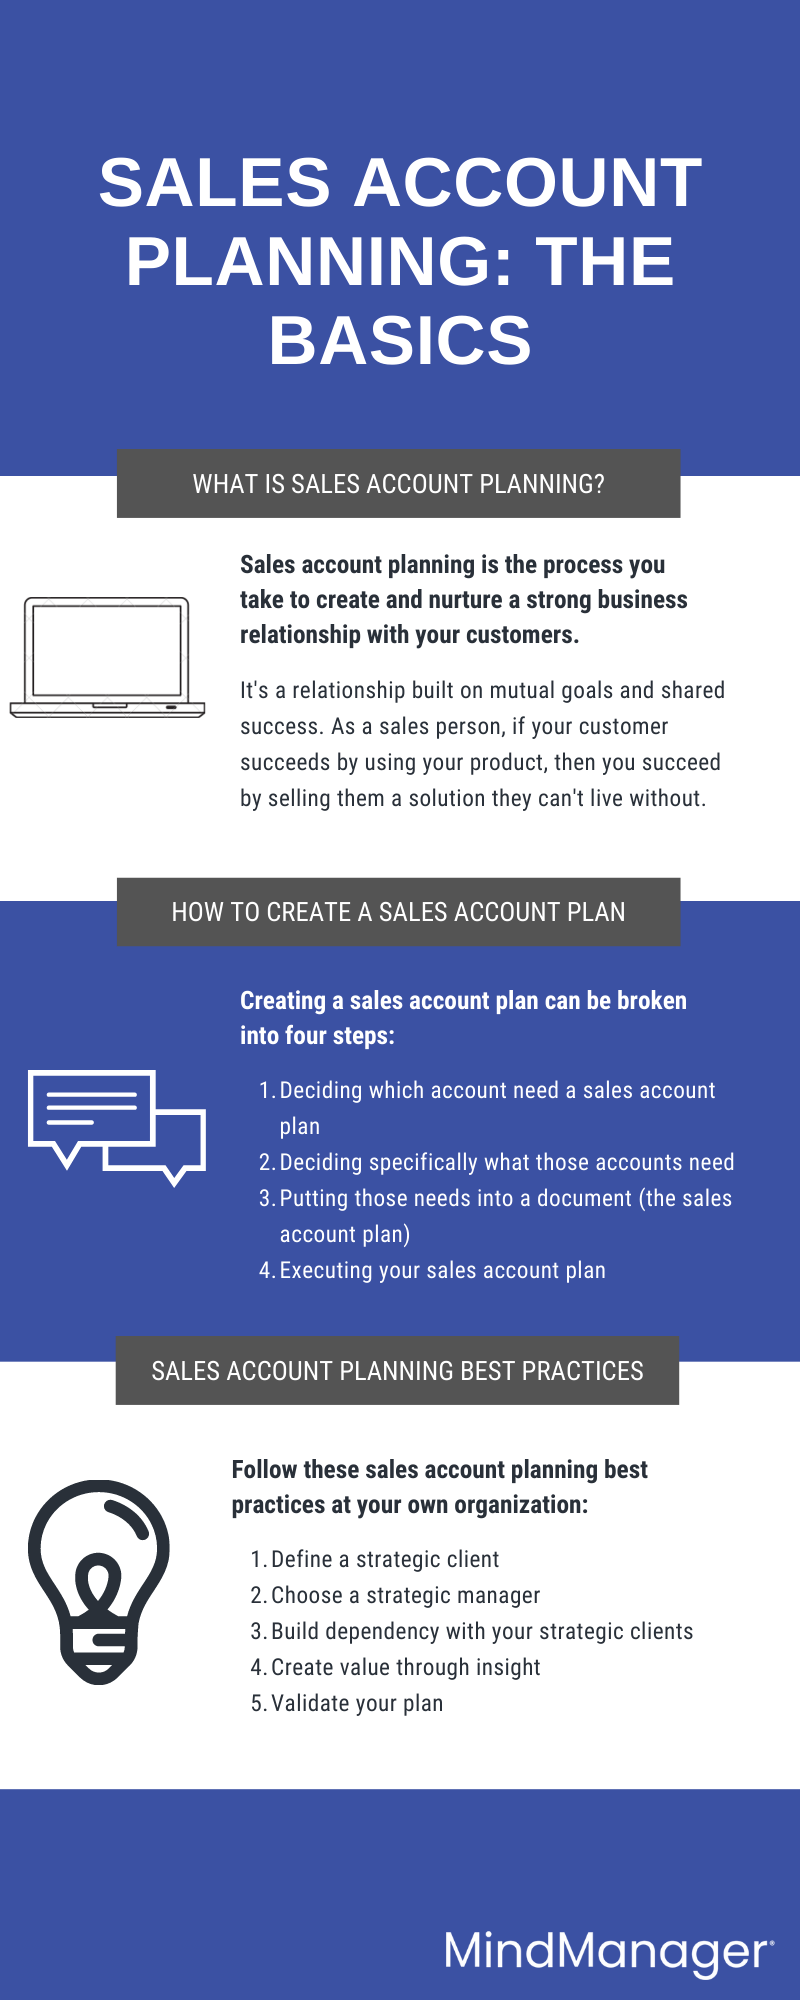 Sales Account Planning | MindManager Blog